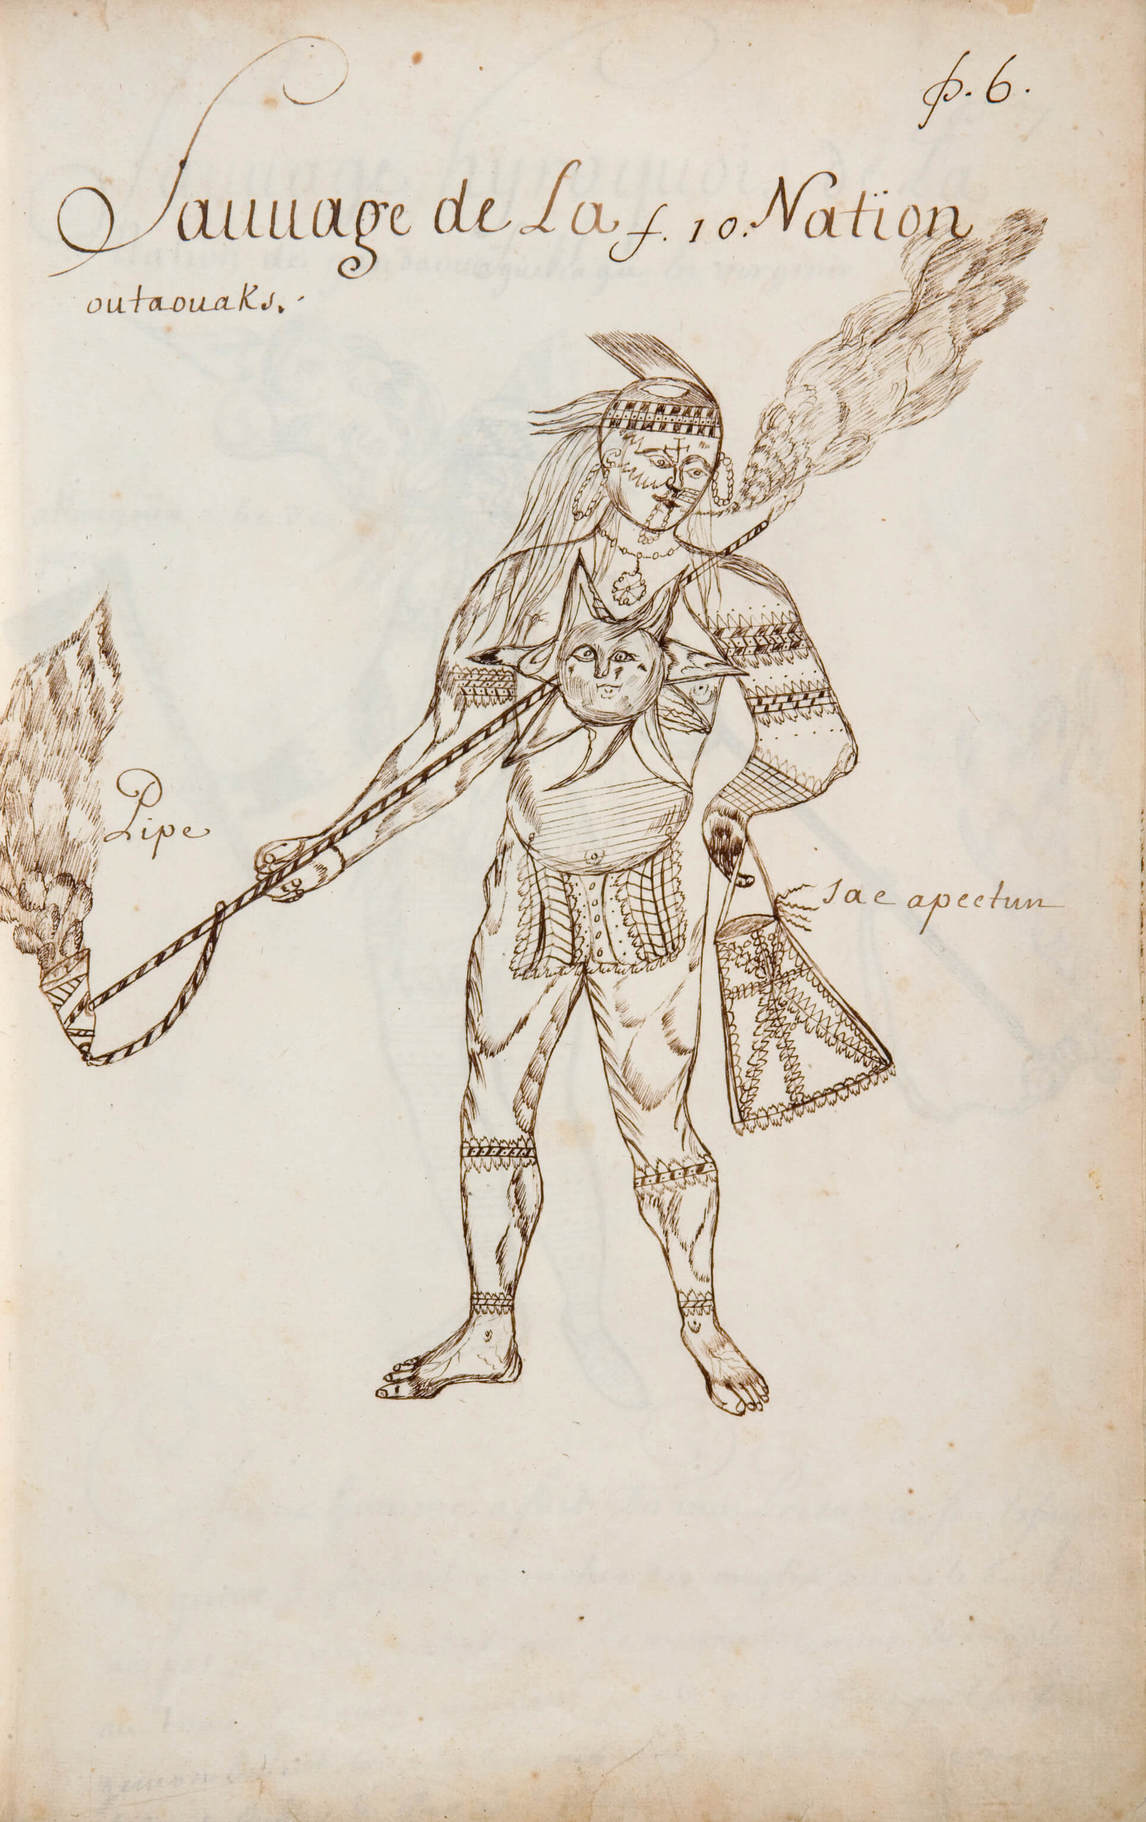 Art Canada Institute, Louis Nicolas, Man of the Outaouak Nation (Sauvage de La Nation outaouaks), Codex Canadensis